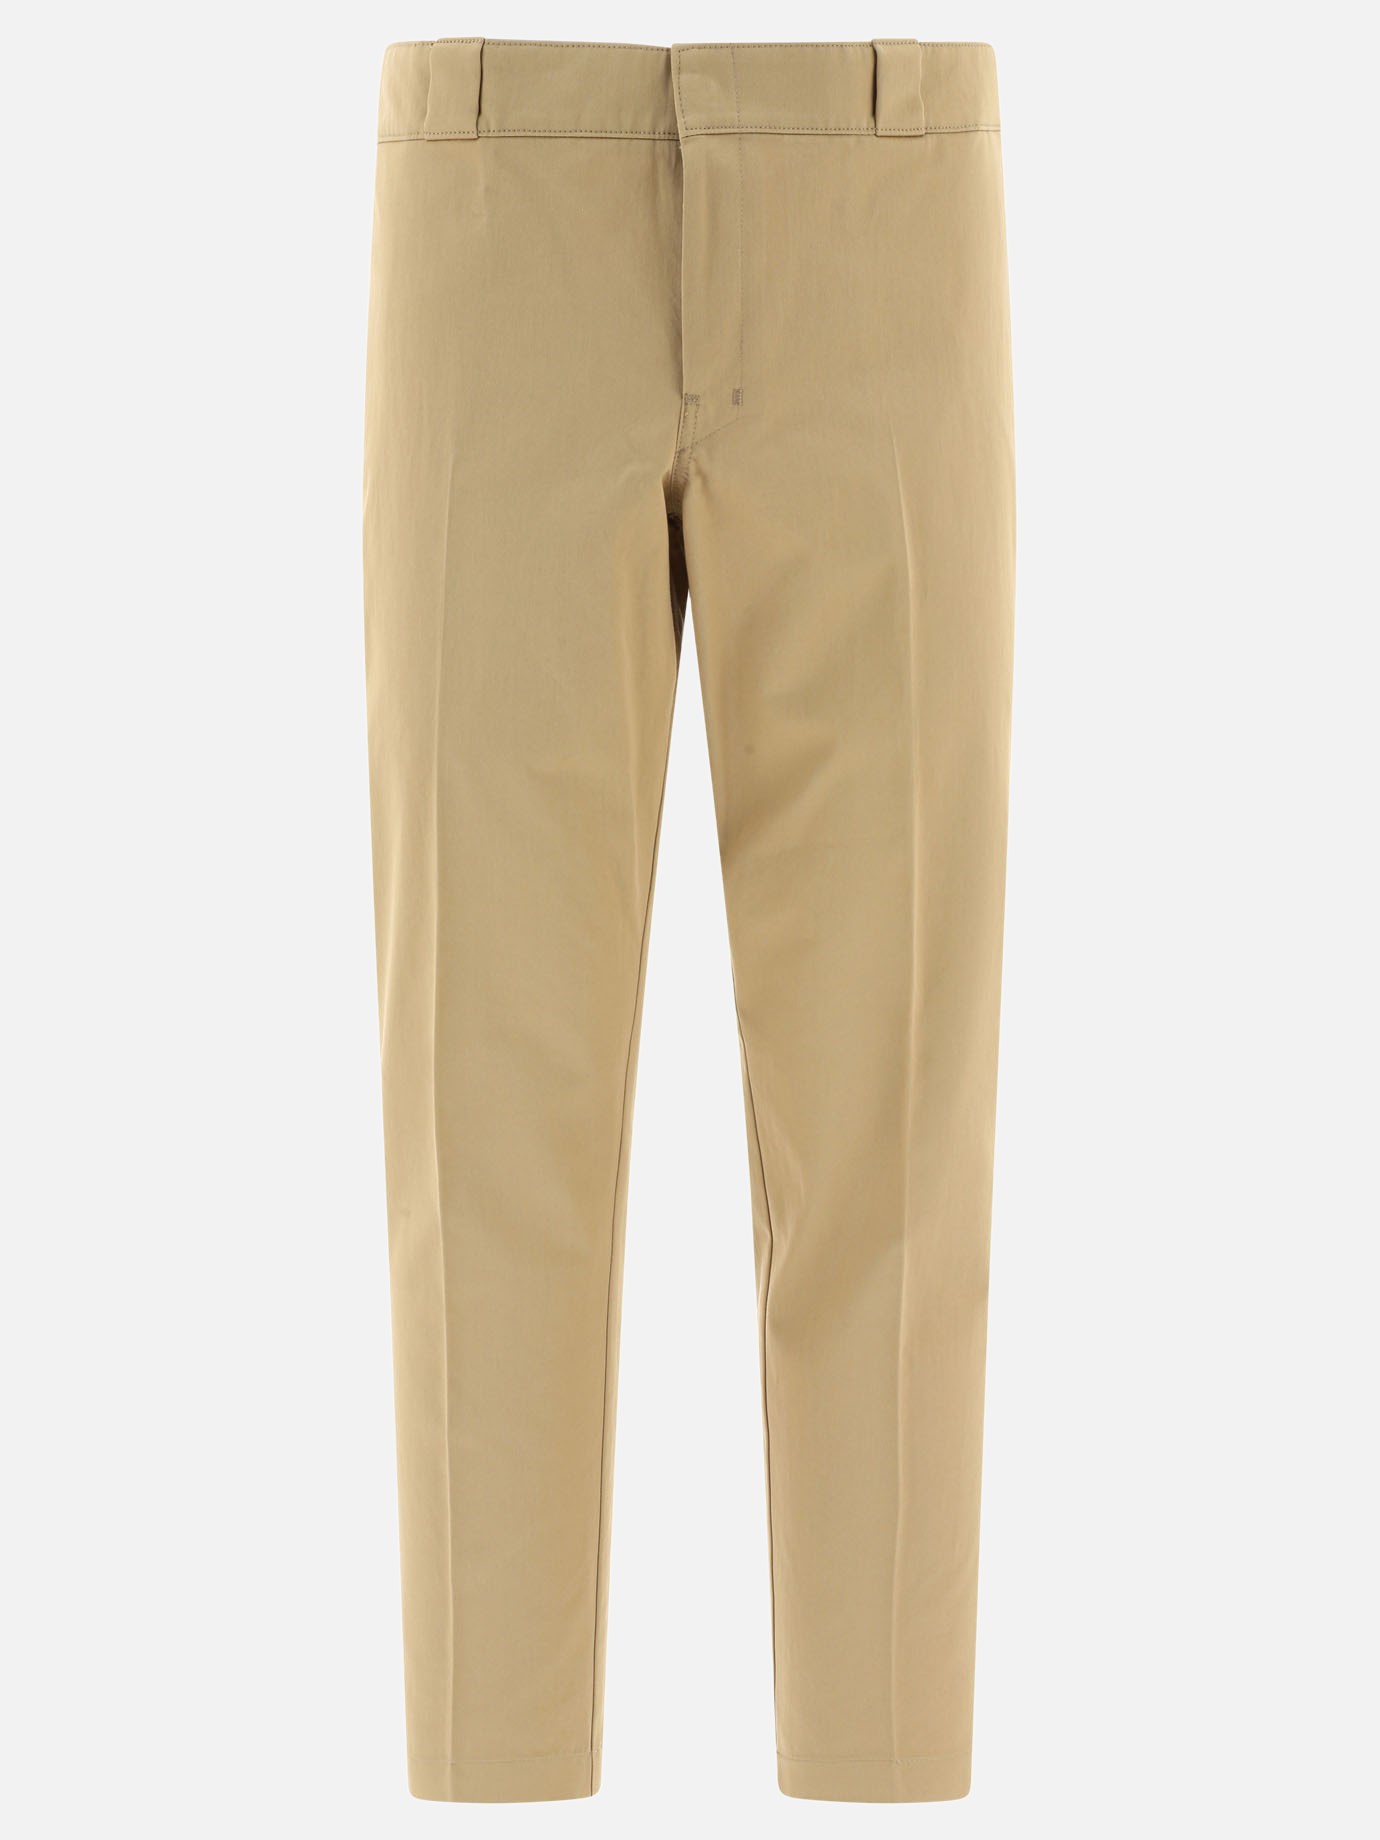 Gabardine trousers by Prada